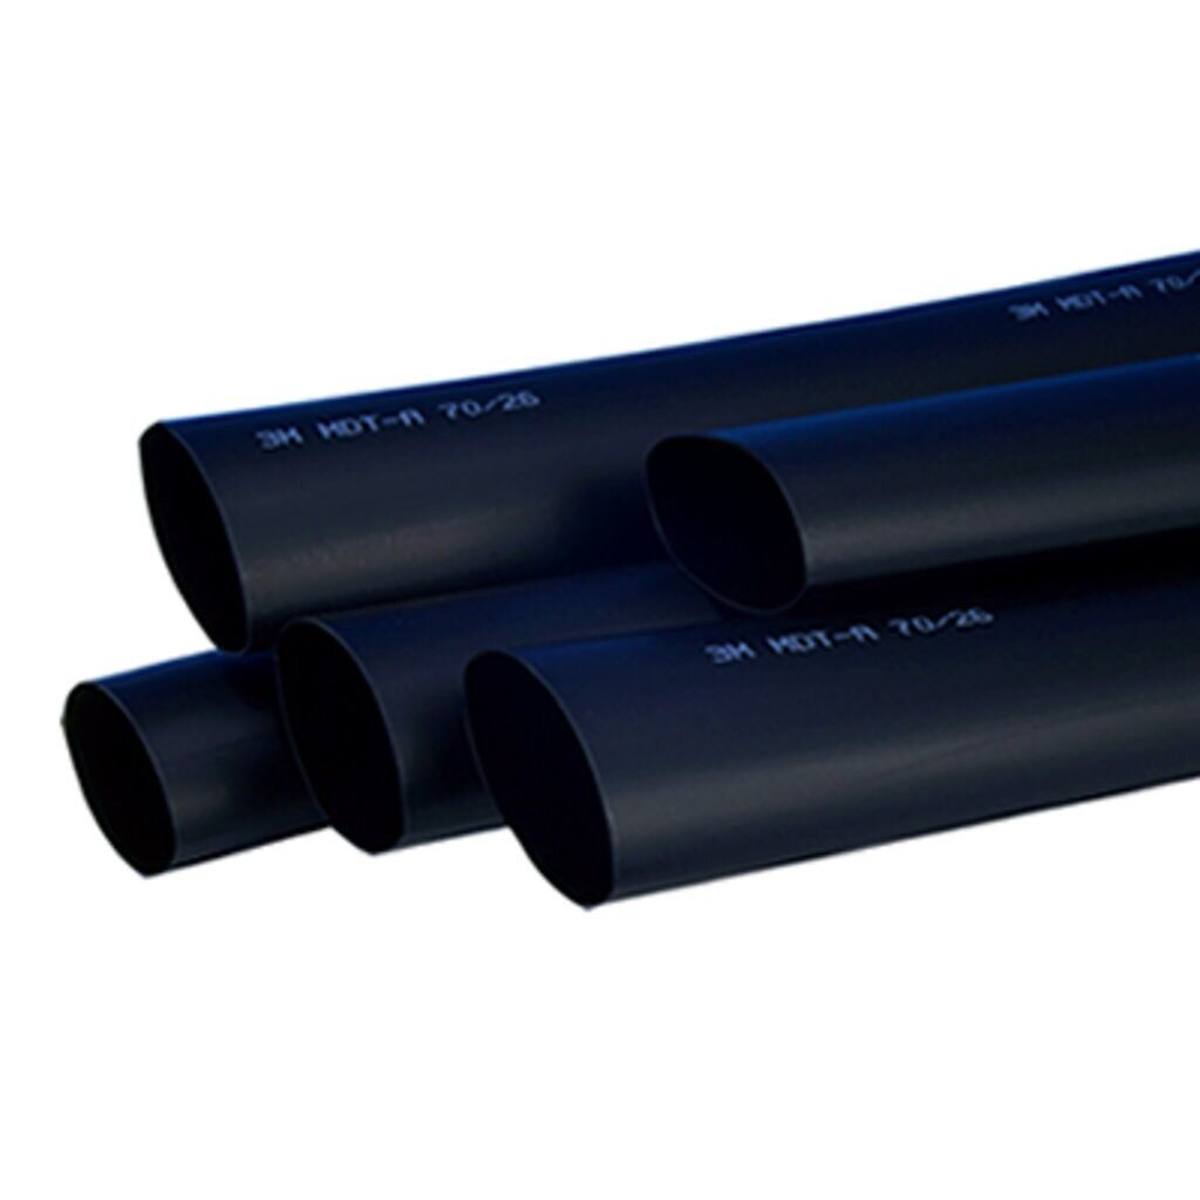 3M MDT-A Medium-wall heat-shrink tubing with adhesive, black, 90/36 mm, 1 m